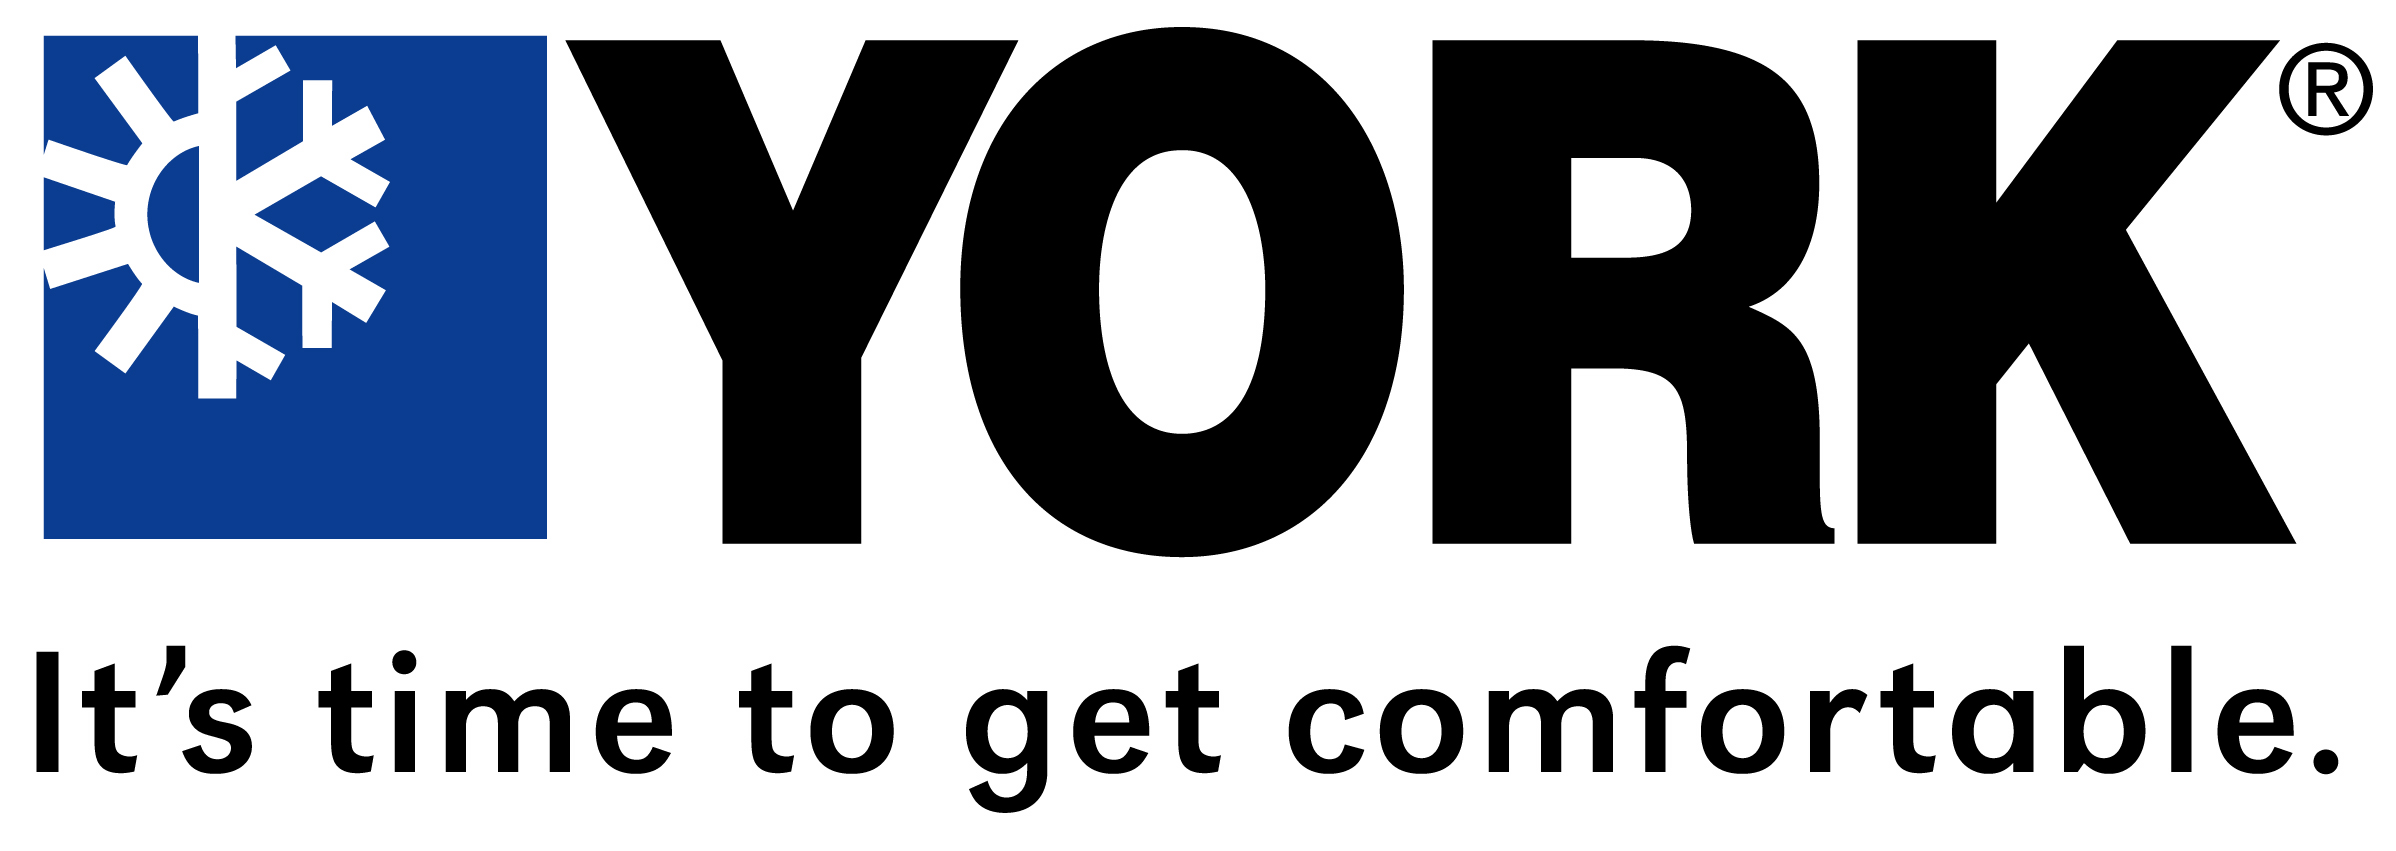 york-logo-2